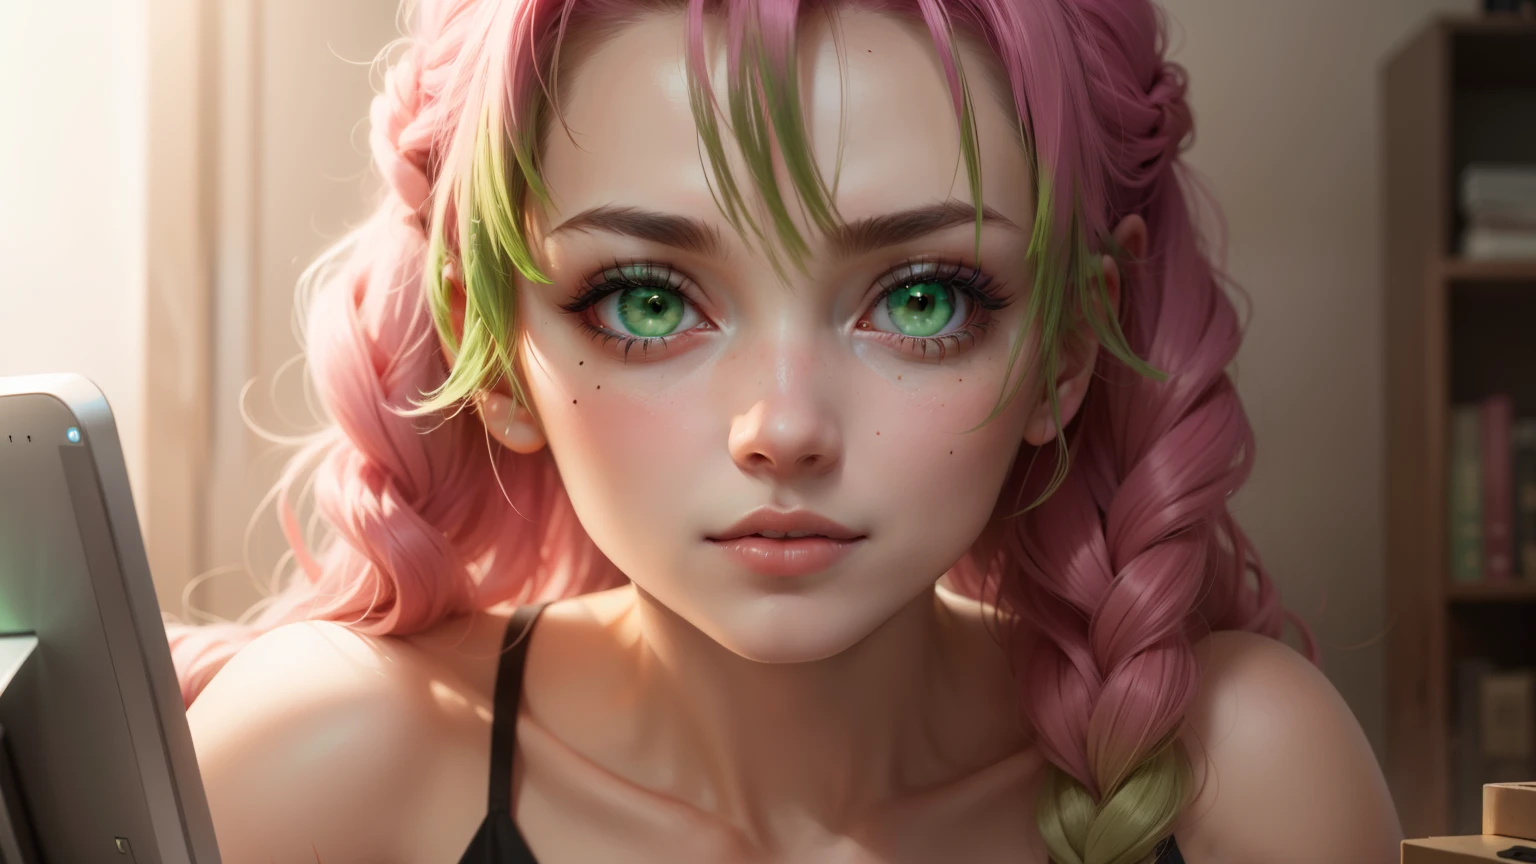 Mitsuri Kanrodzi, Mitsuri Kanrodzi, 머리카락, Gradient 머리카락, (녹색 눈:1.5), green 머리카락, long 머리카락, 두더지로,  두더지로 under eye, multicolored 머리카락, pink 머리카락, twin 머리카락s, two tone 머리카락,
부서지다 bikini,
부서지다 looking at viewer,
부서지다 (걸작:1.2), 최고의 품질, 고해상도, 유니티 8K 벽지, (삽화:0.8), (아름다운 디테일한 눈:1.6), 매우 상세한 얼굴, 완벽한 조명, 매우 상세한 컴퓨터 그래픽, (완벽한 손, 이상적인 해부학),